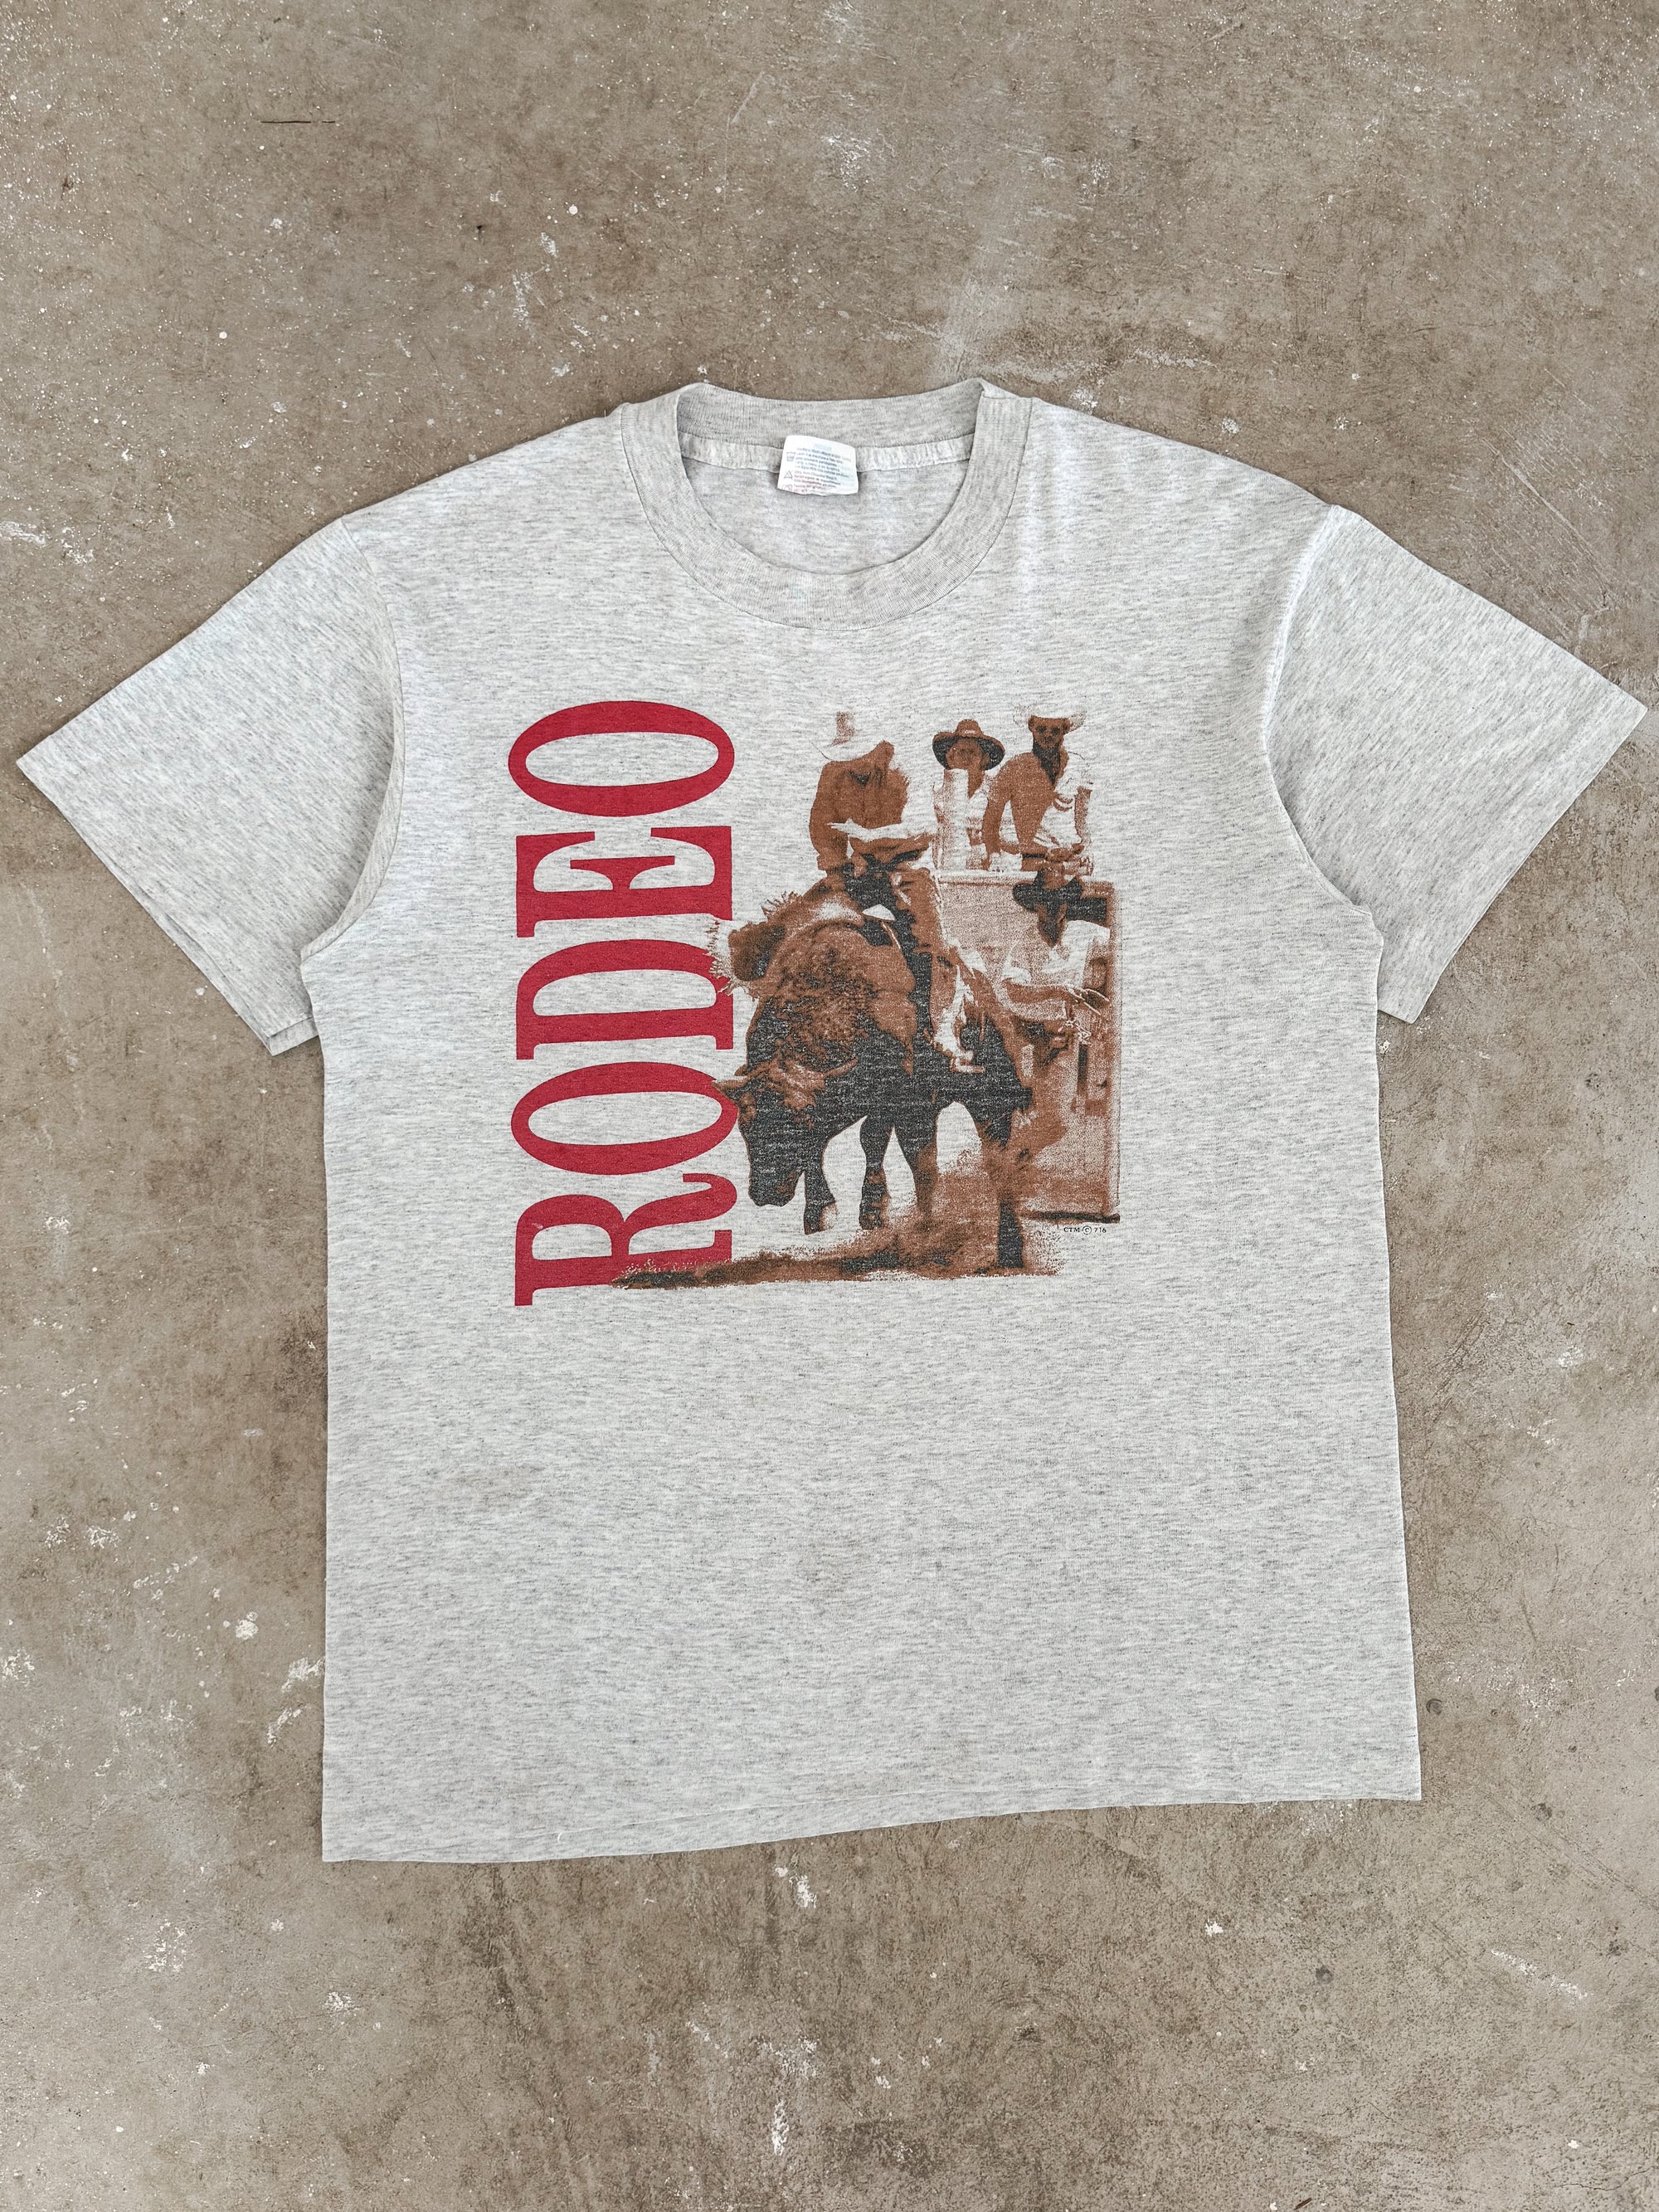 1990s "Rodeo" Tee (M)